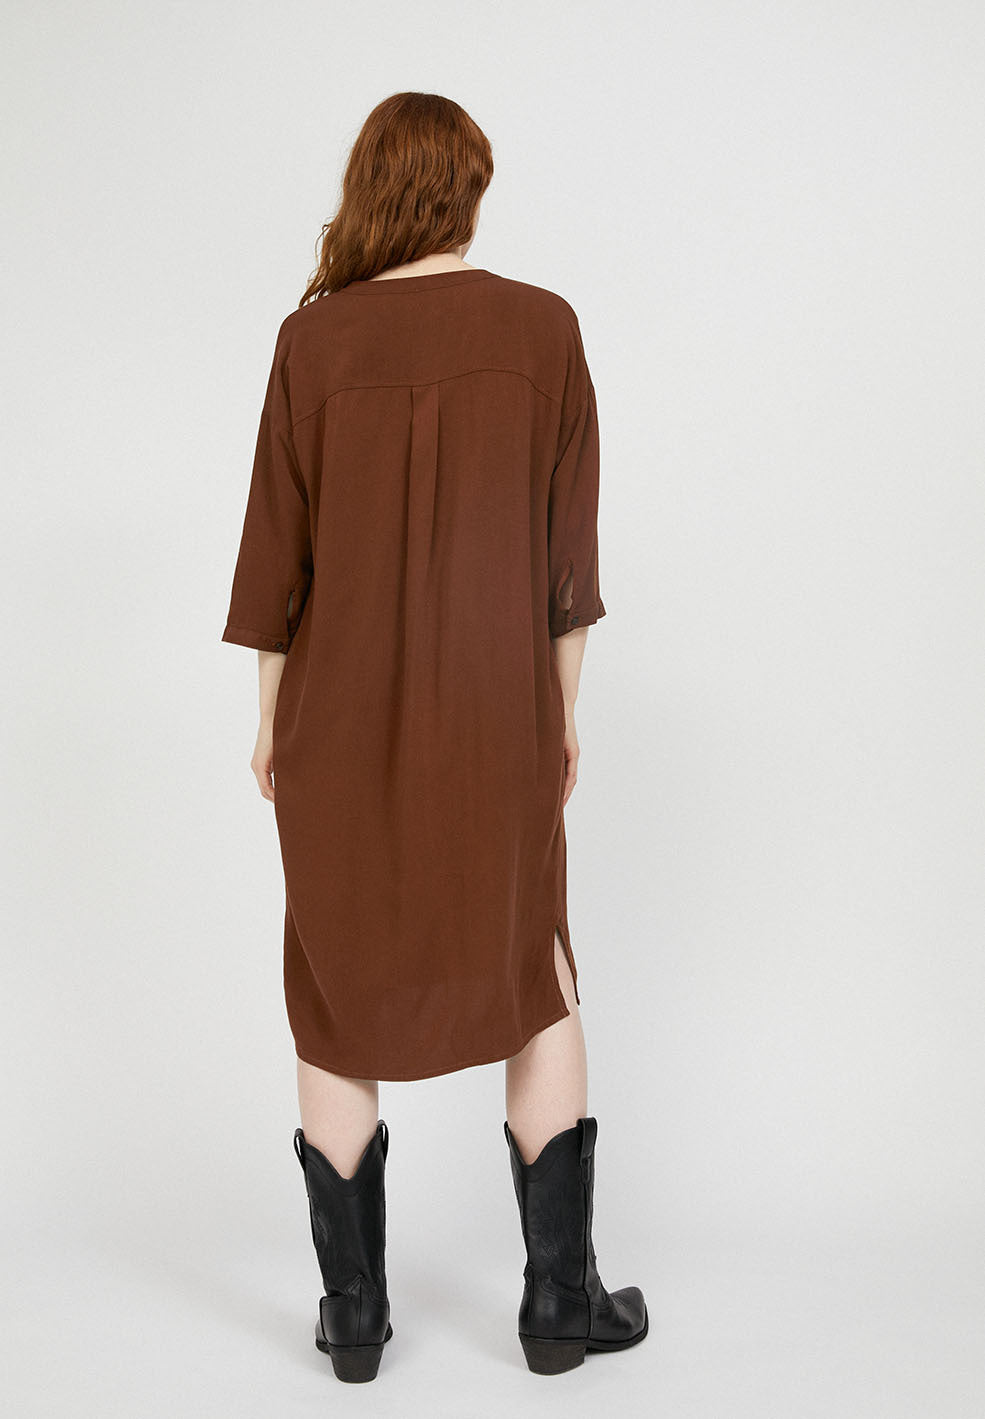 MAARNIE Brown Dress in Lenzing Ecovero Size M